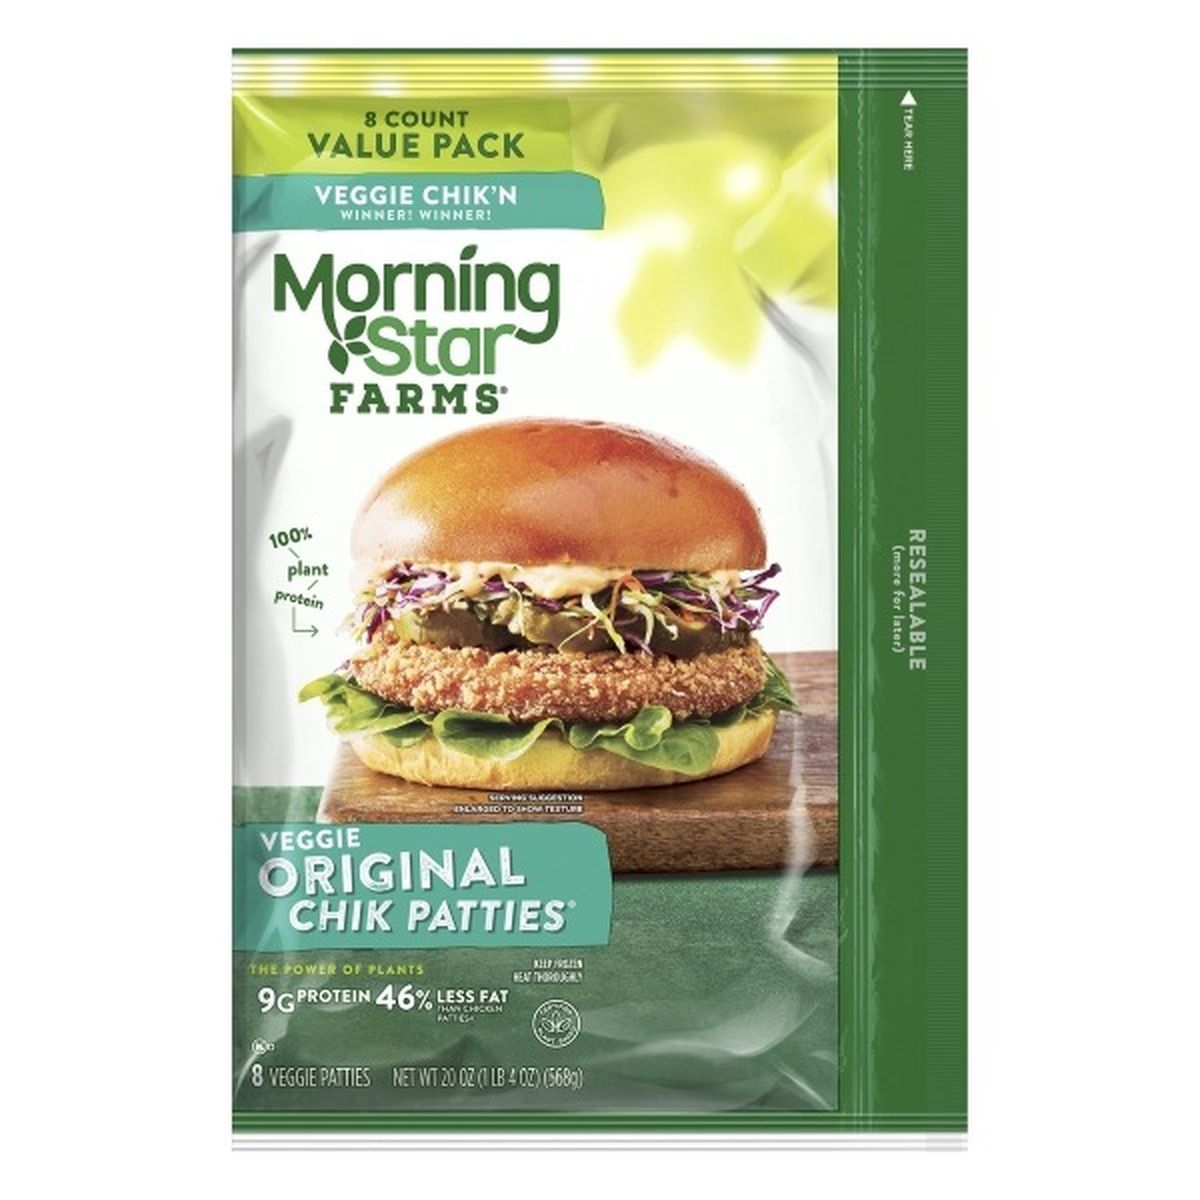 Calories in Morning Star Farms Veggie Chik Patties, Original, Value Pack